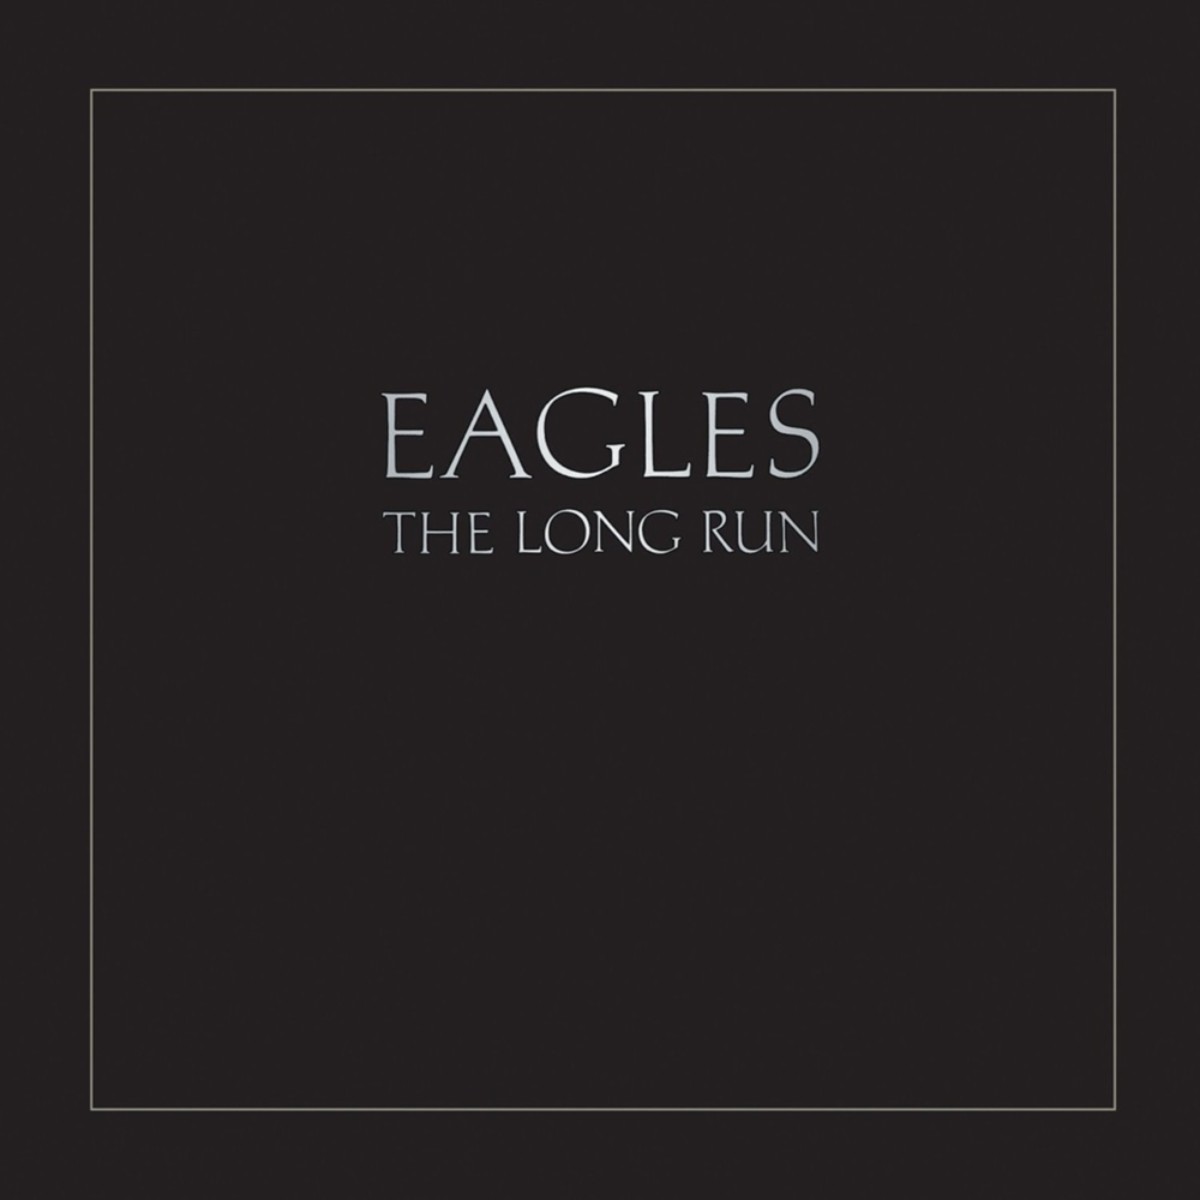 The Eagles, "The Long Run" album